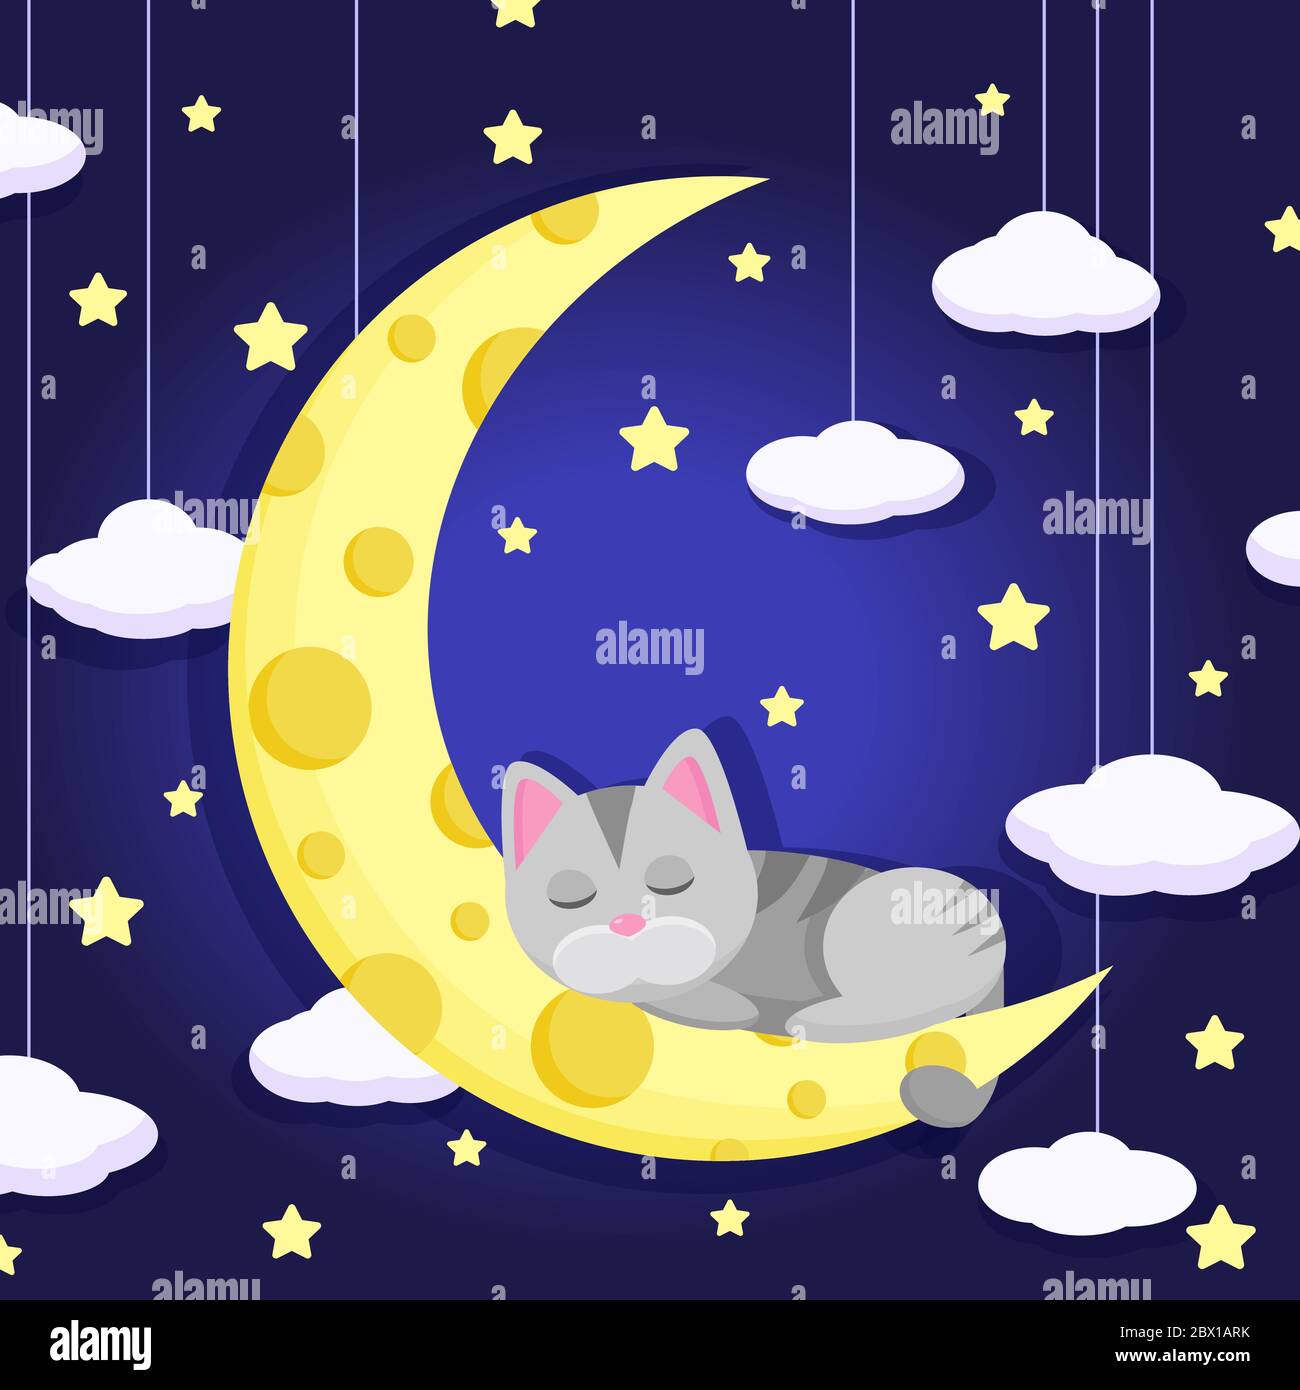 Good Night Design Immagini E Fotos Stock Alamy